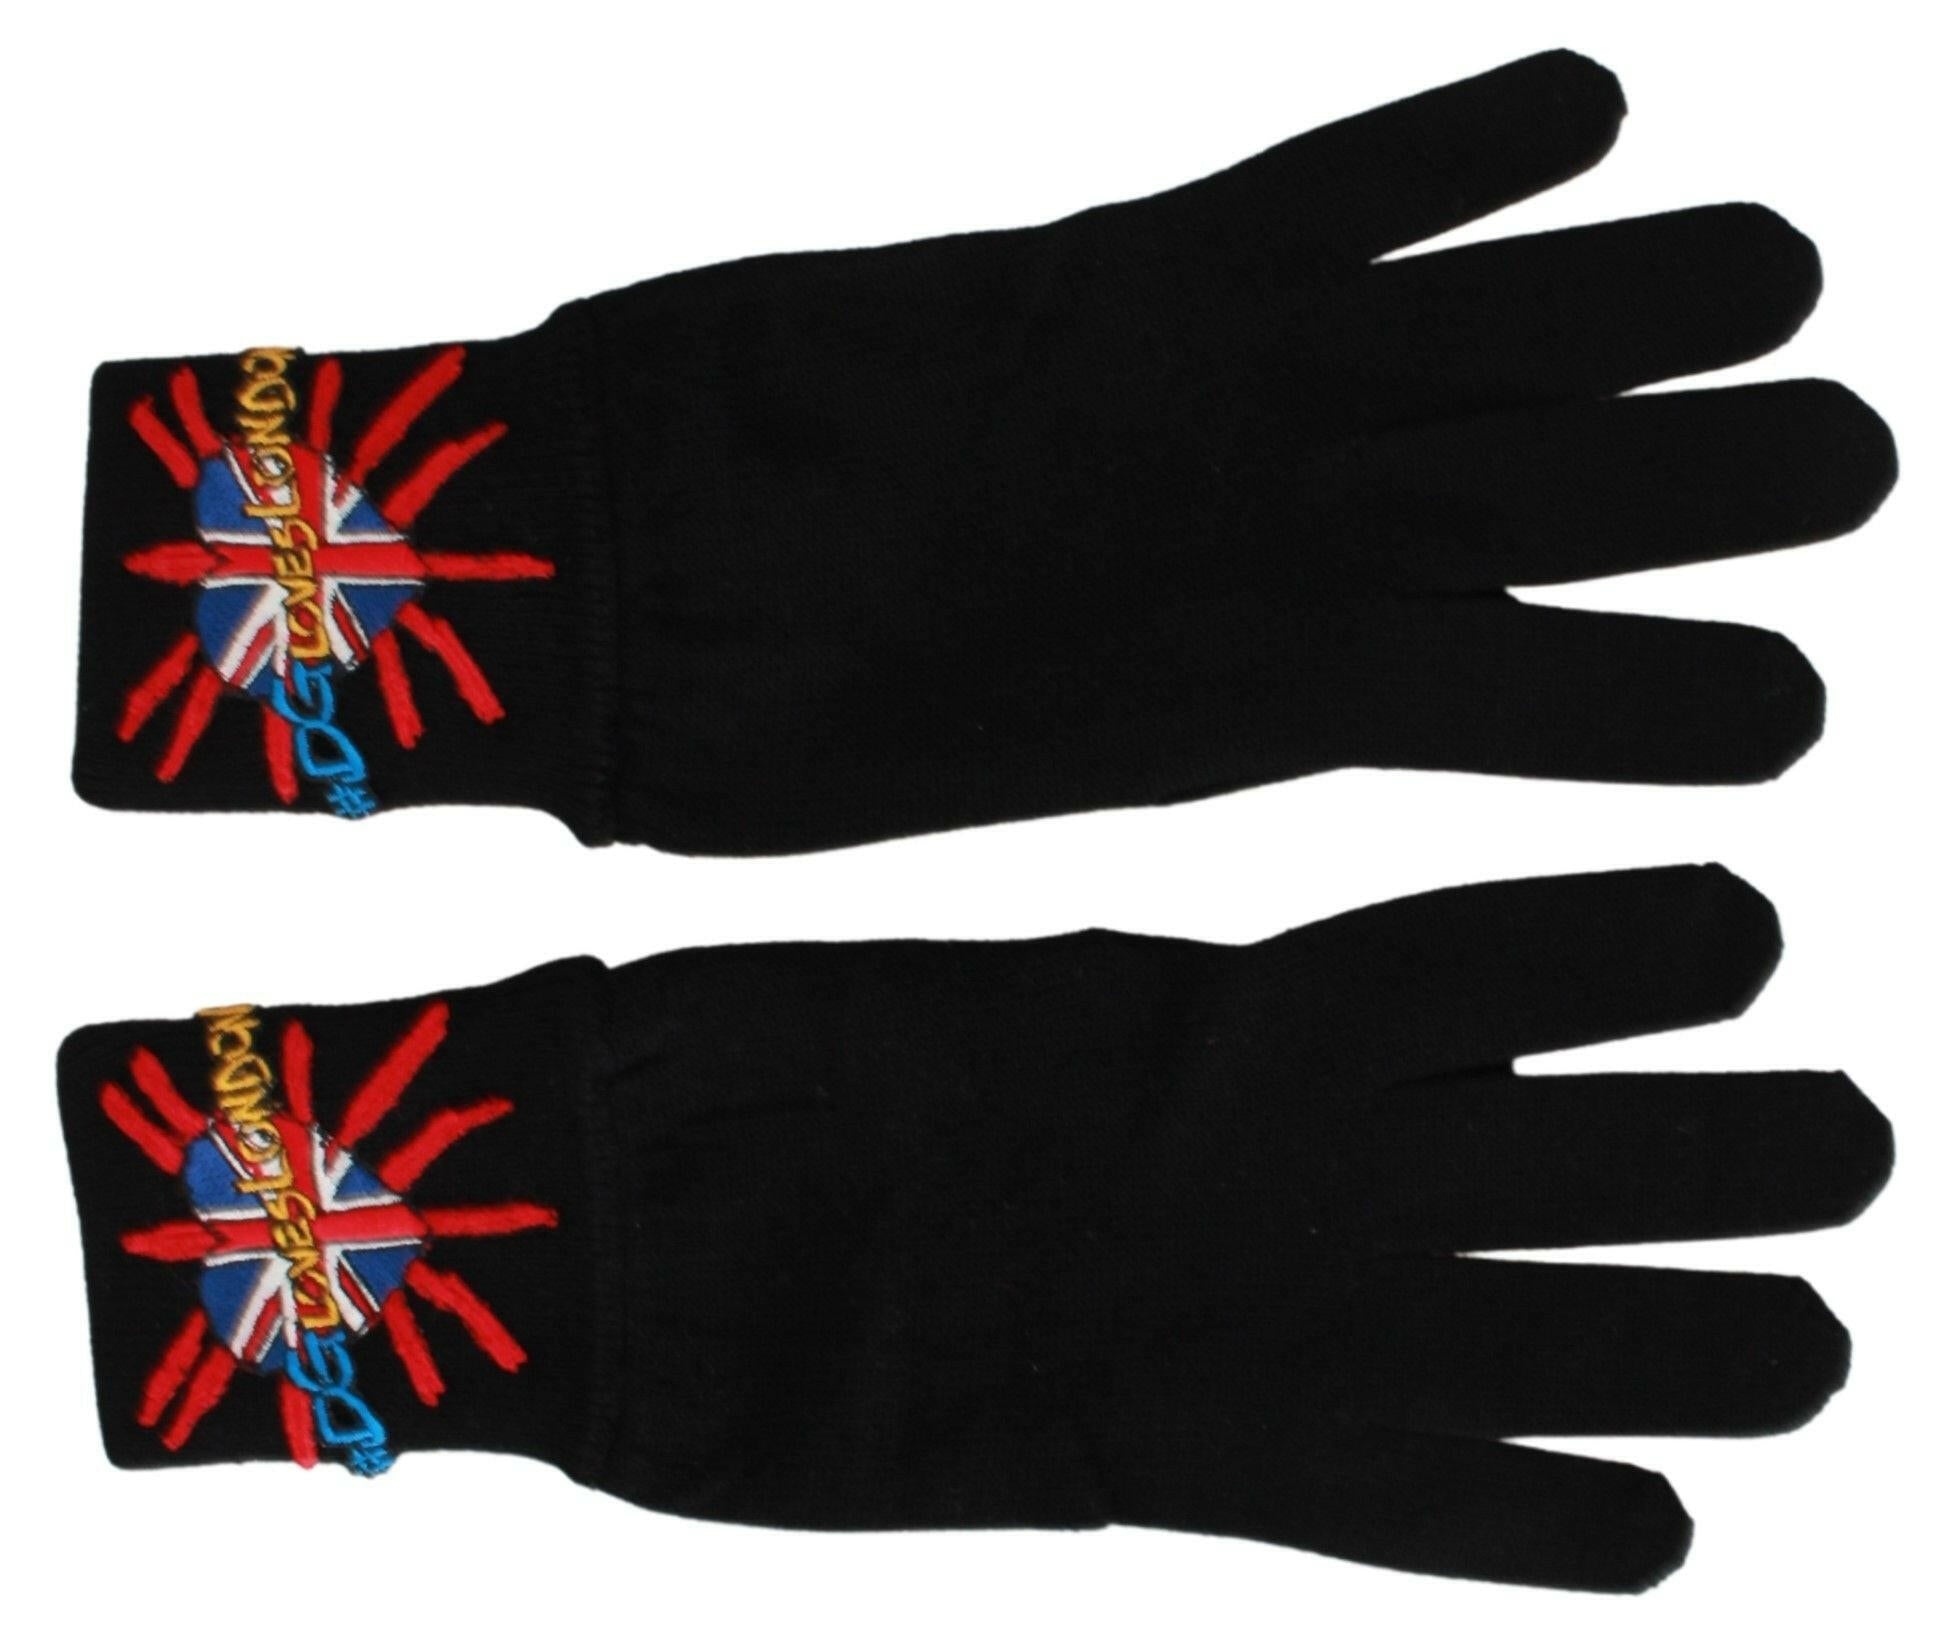 Dolce & Gabbana Black #DGLovesLondon Embroidered Wool Gloves - GENUINE AUTHENTIC BRAND LLC  